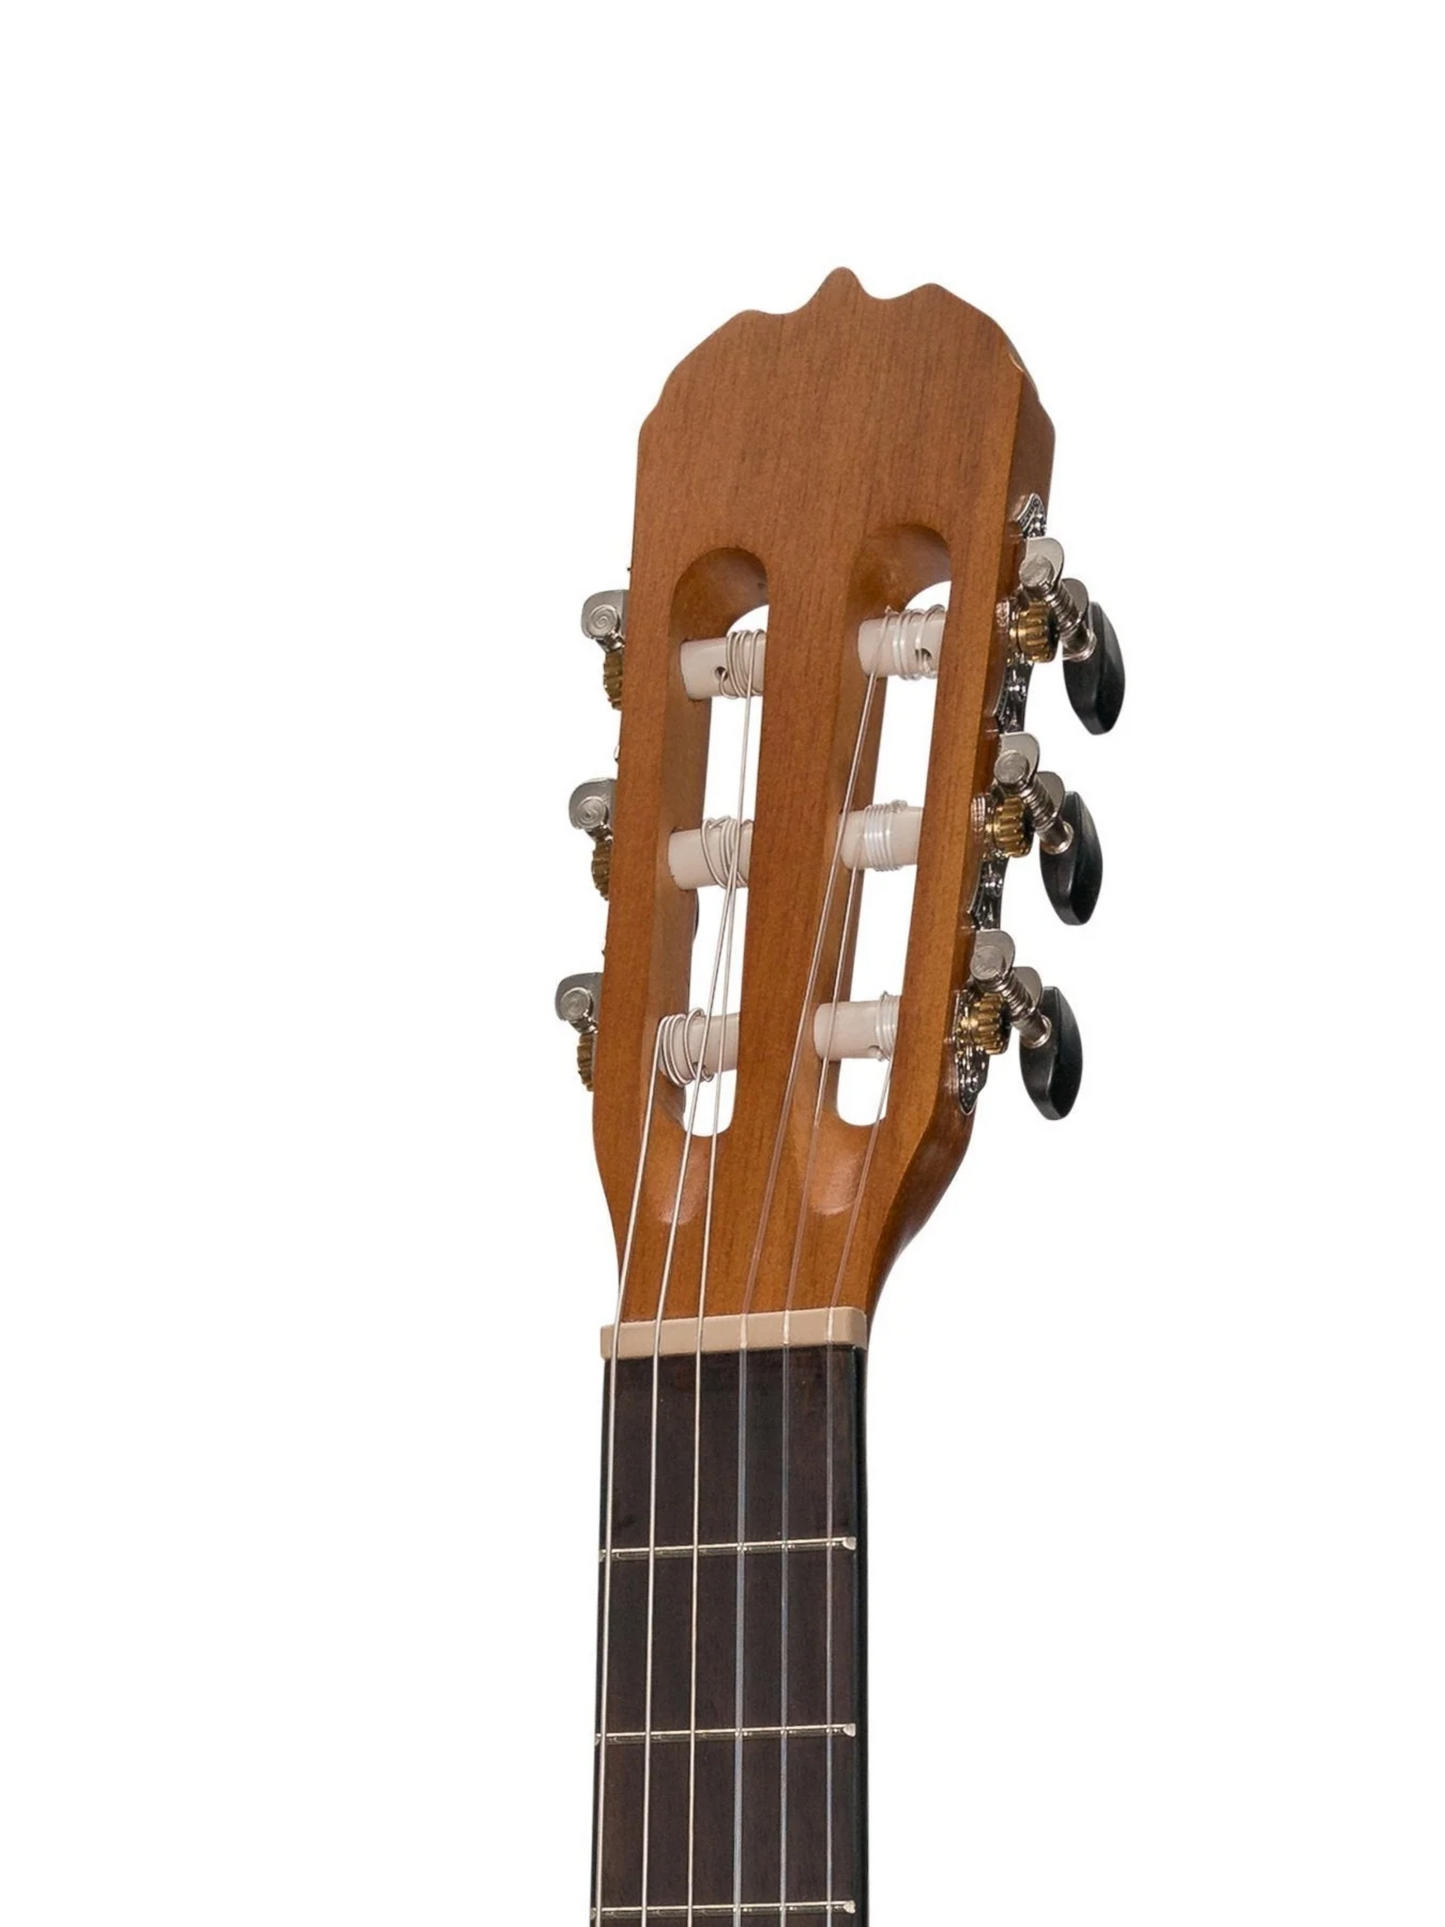 Sanchez Classic Guitar - 1/2 Size with Gig Bag